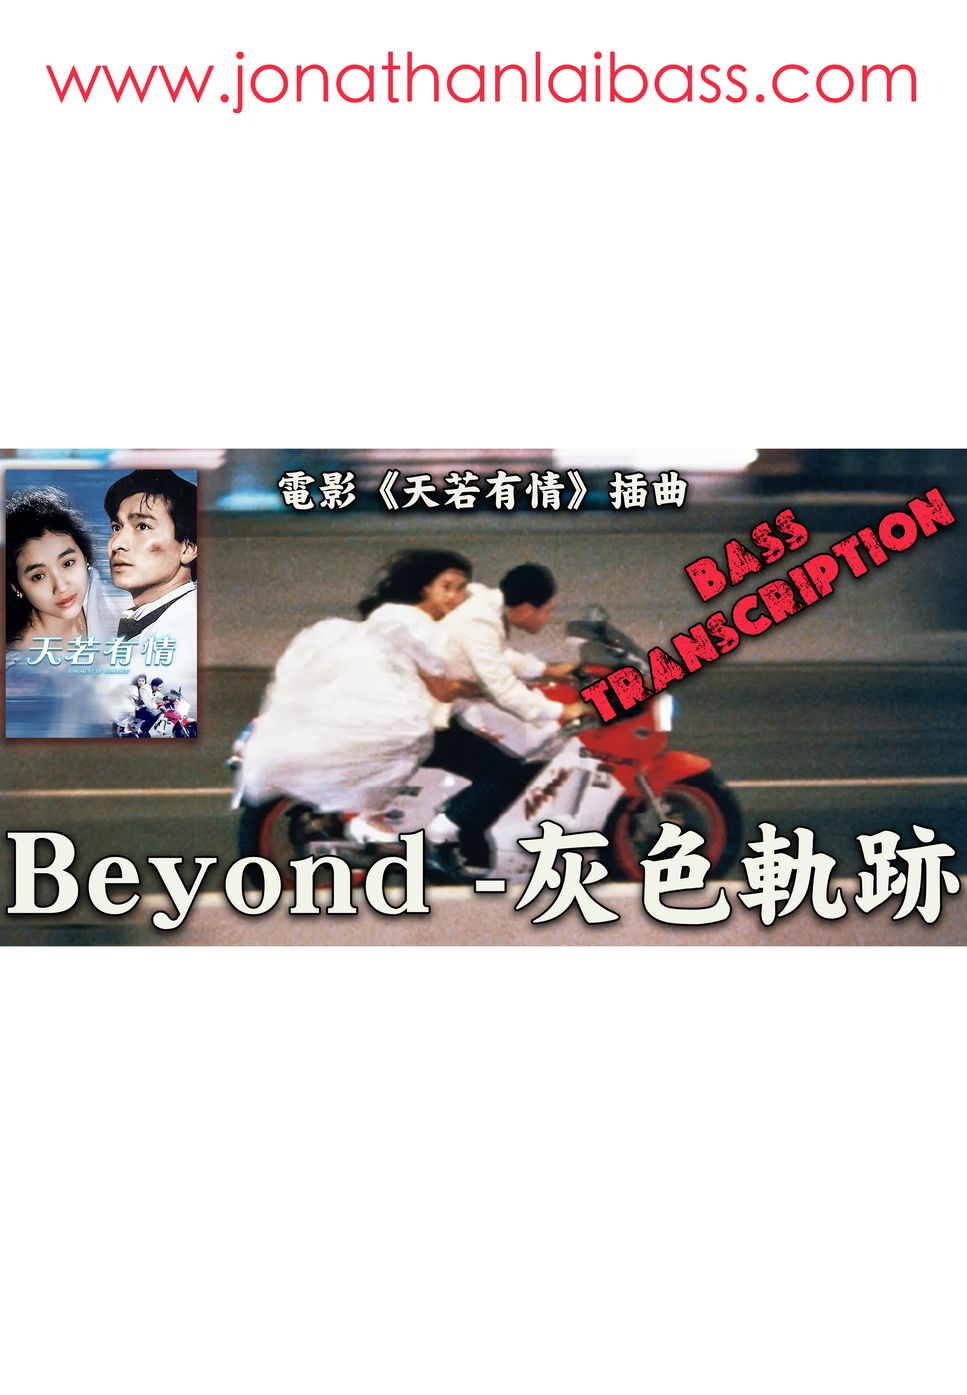 Beyond - 灰色軌跡 (Bass Guitar Score 低音結他譜) by Jonathan Lai